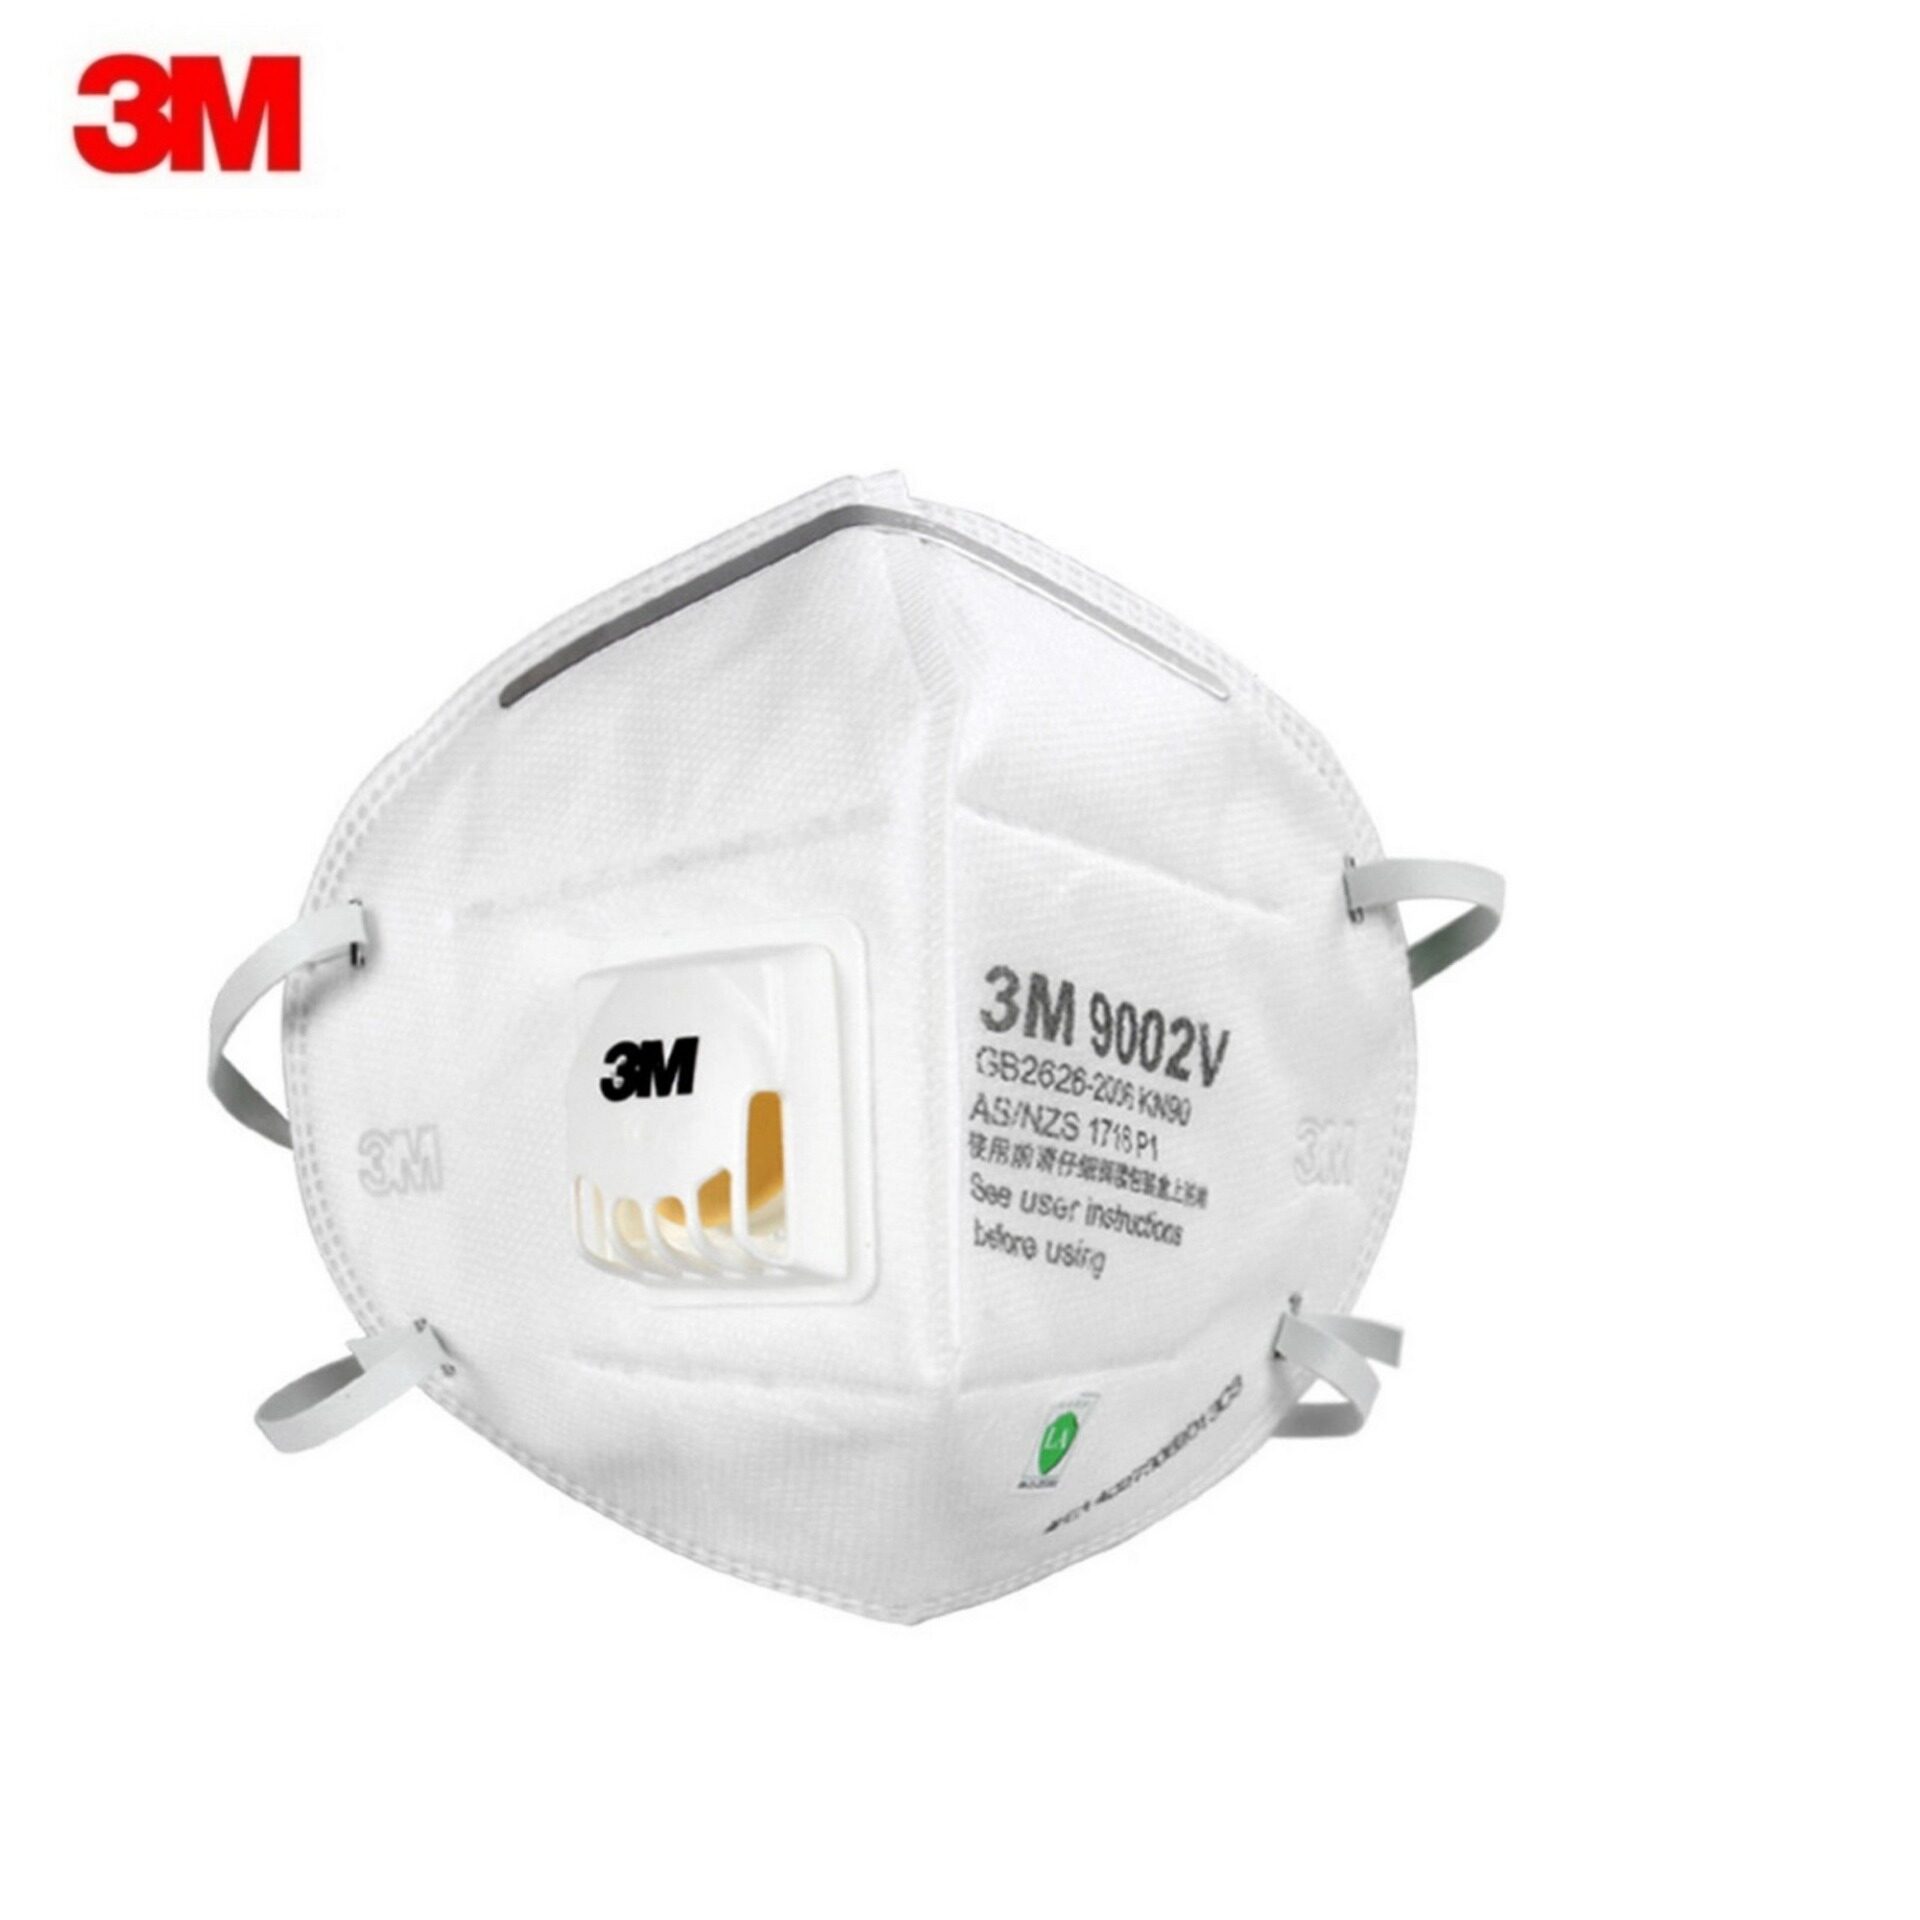 3M (1ชิ้น) 9002V สีขาว หรือ 9542V สีเทา หน้ากากป้องกันฝุ่นละออง และวาล์ว ชนิดสายคาดศีรษะ Dust Mist Mask